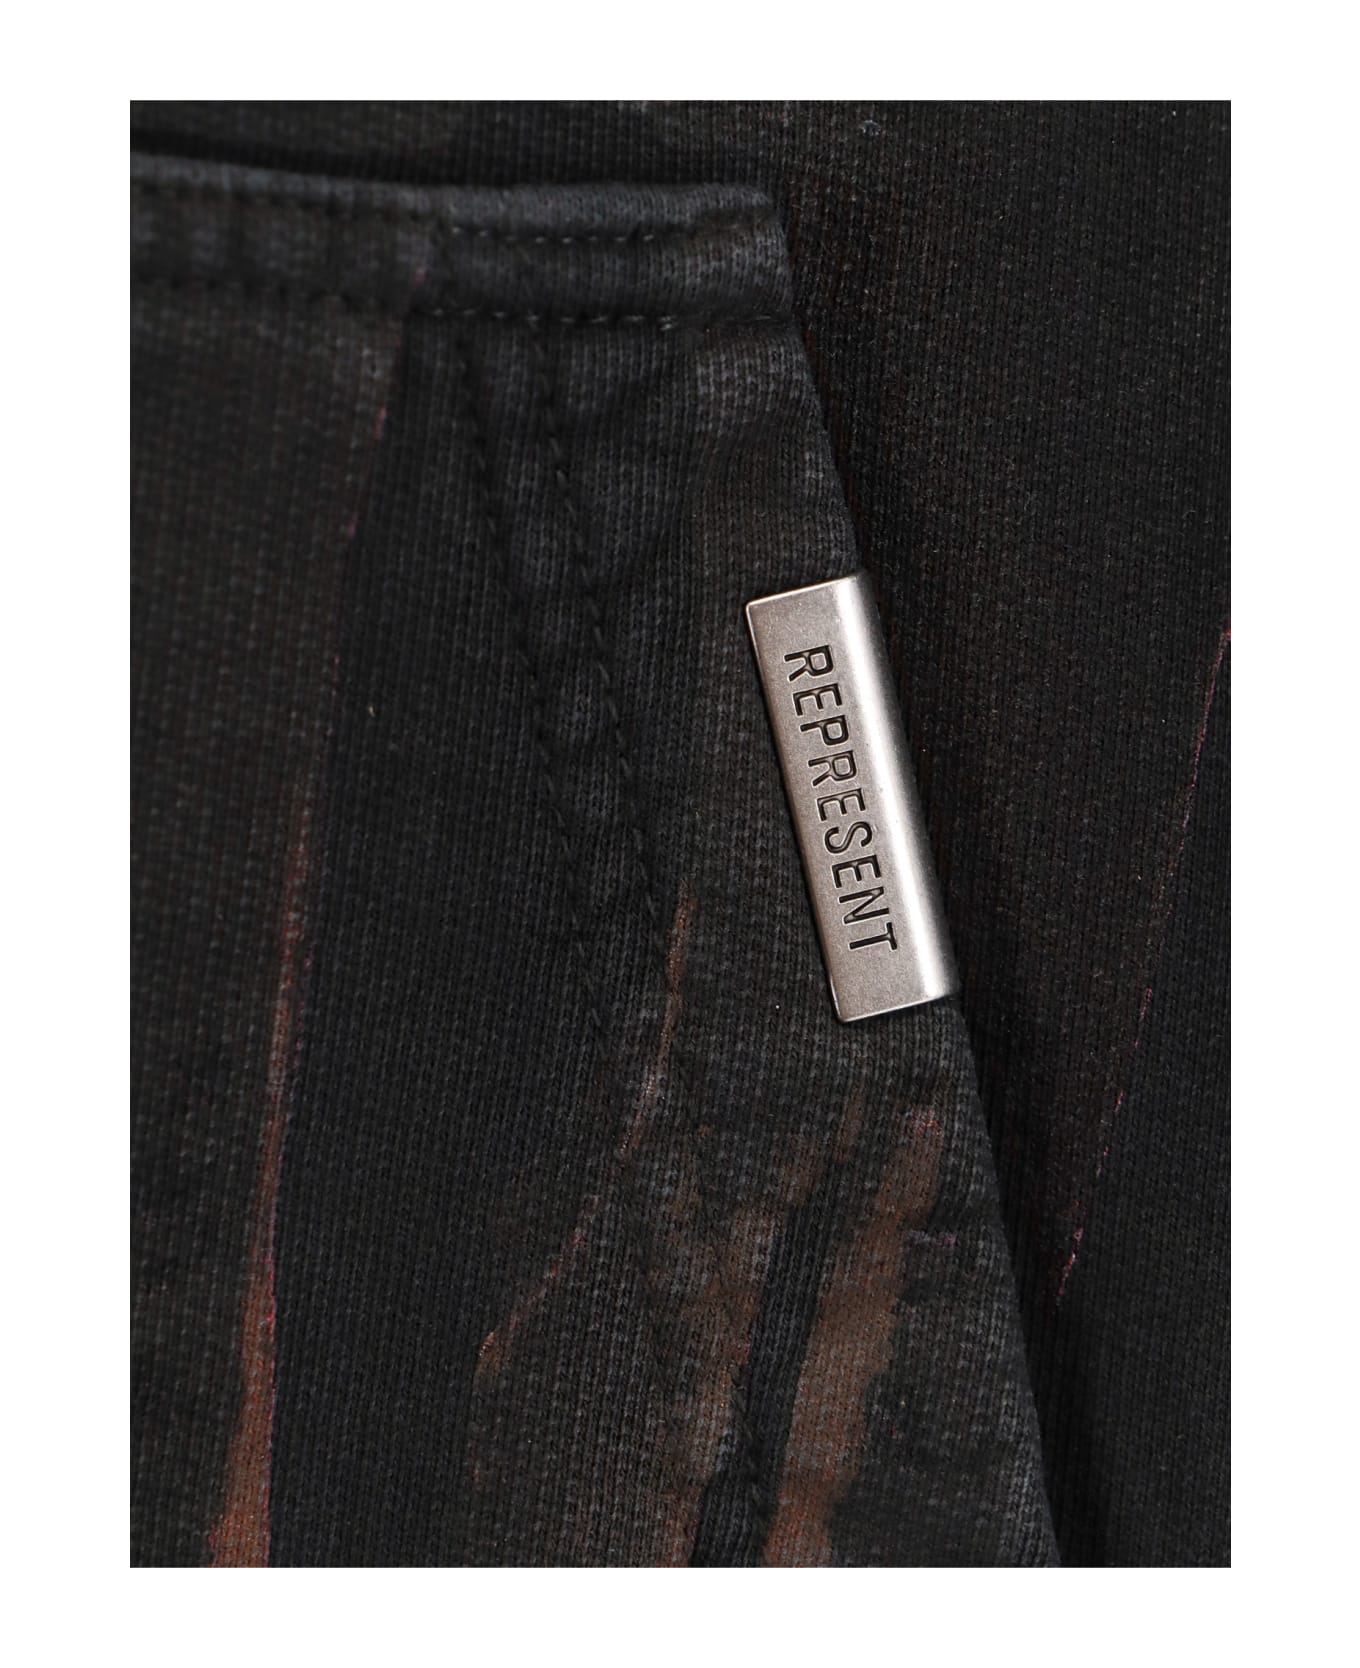 REPRESENT Sweatshirt - Vintage Black